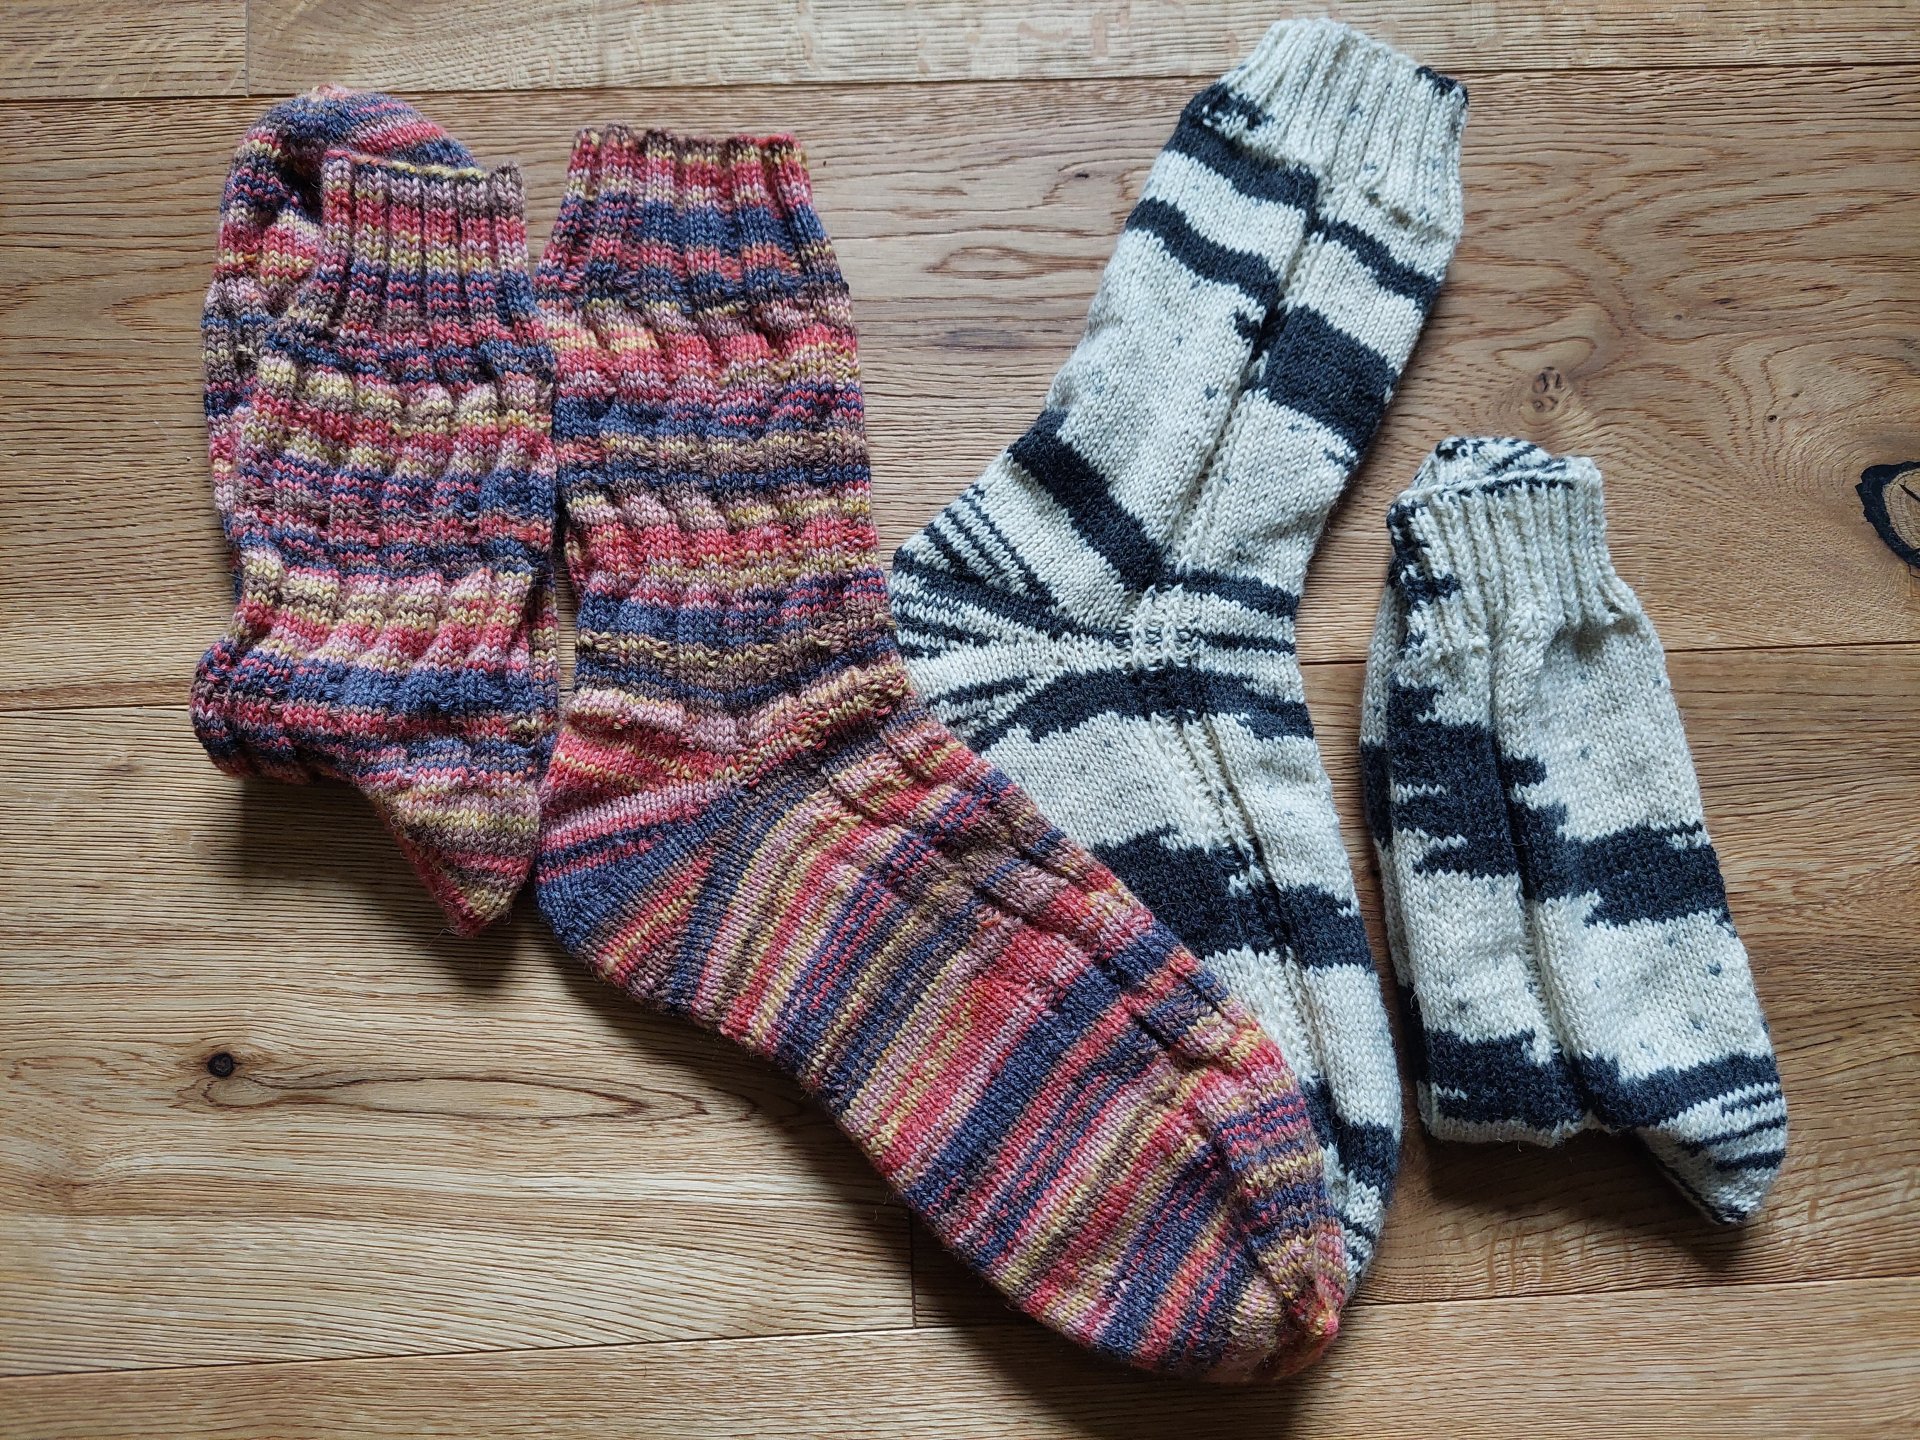 Wavy socks und Ralley-Socken